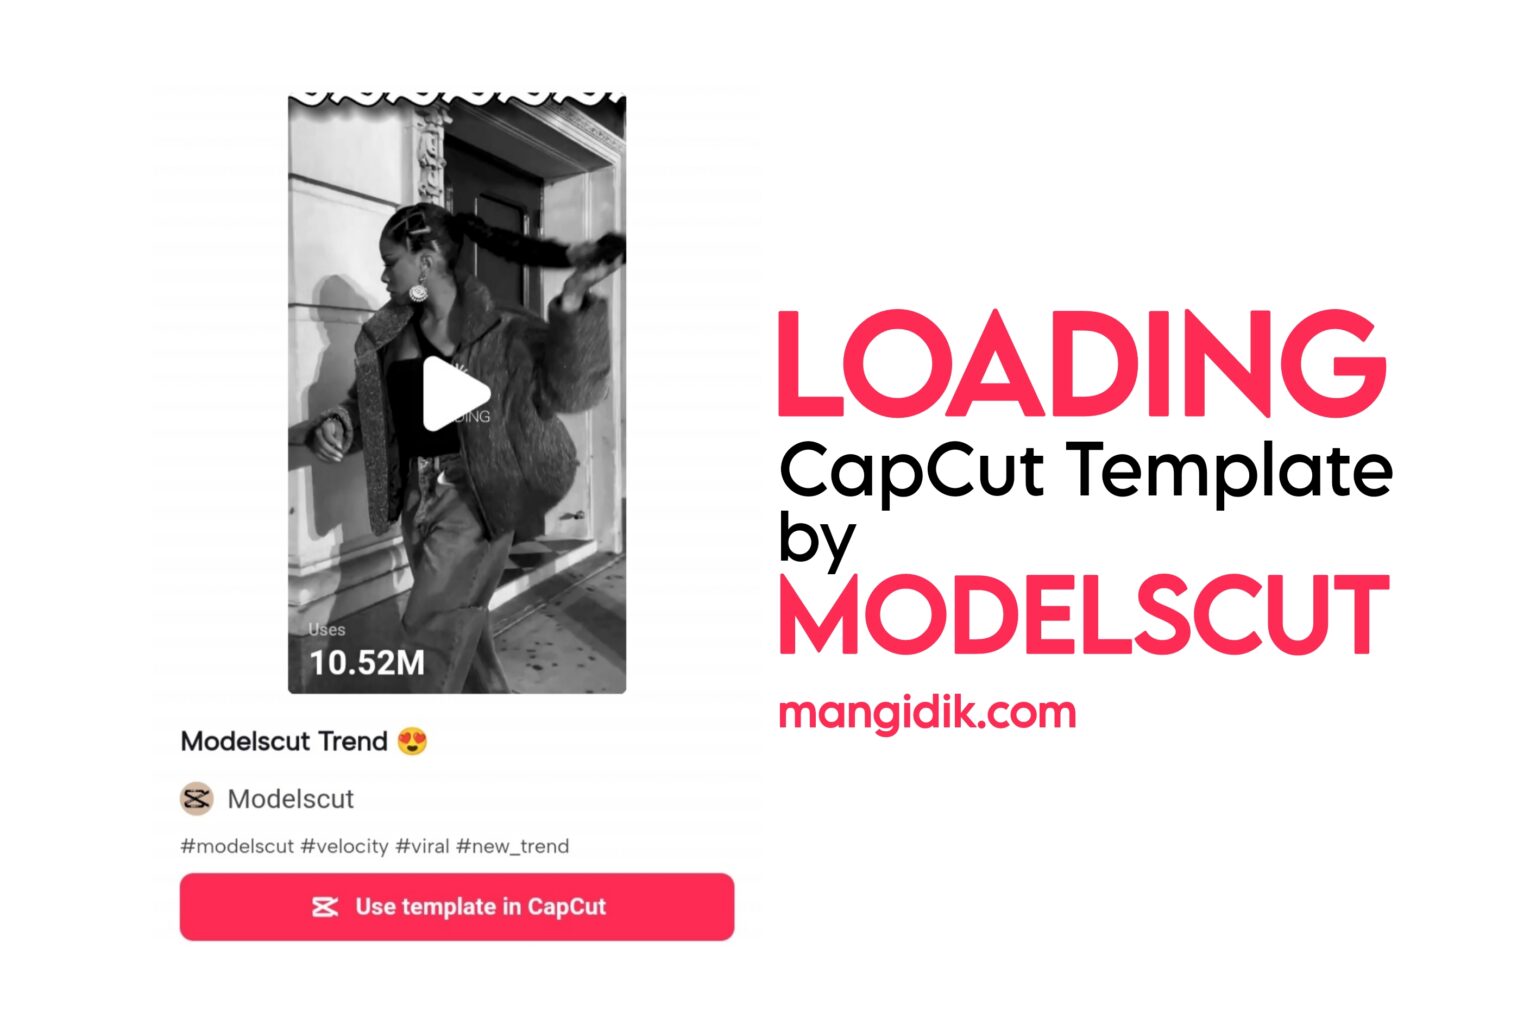 loading-capcut-template-link-by-modelscut-slow-motion-trend-mang-idik